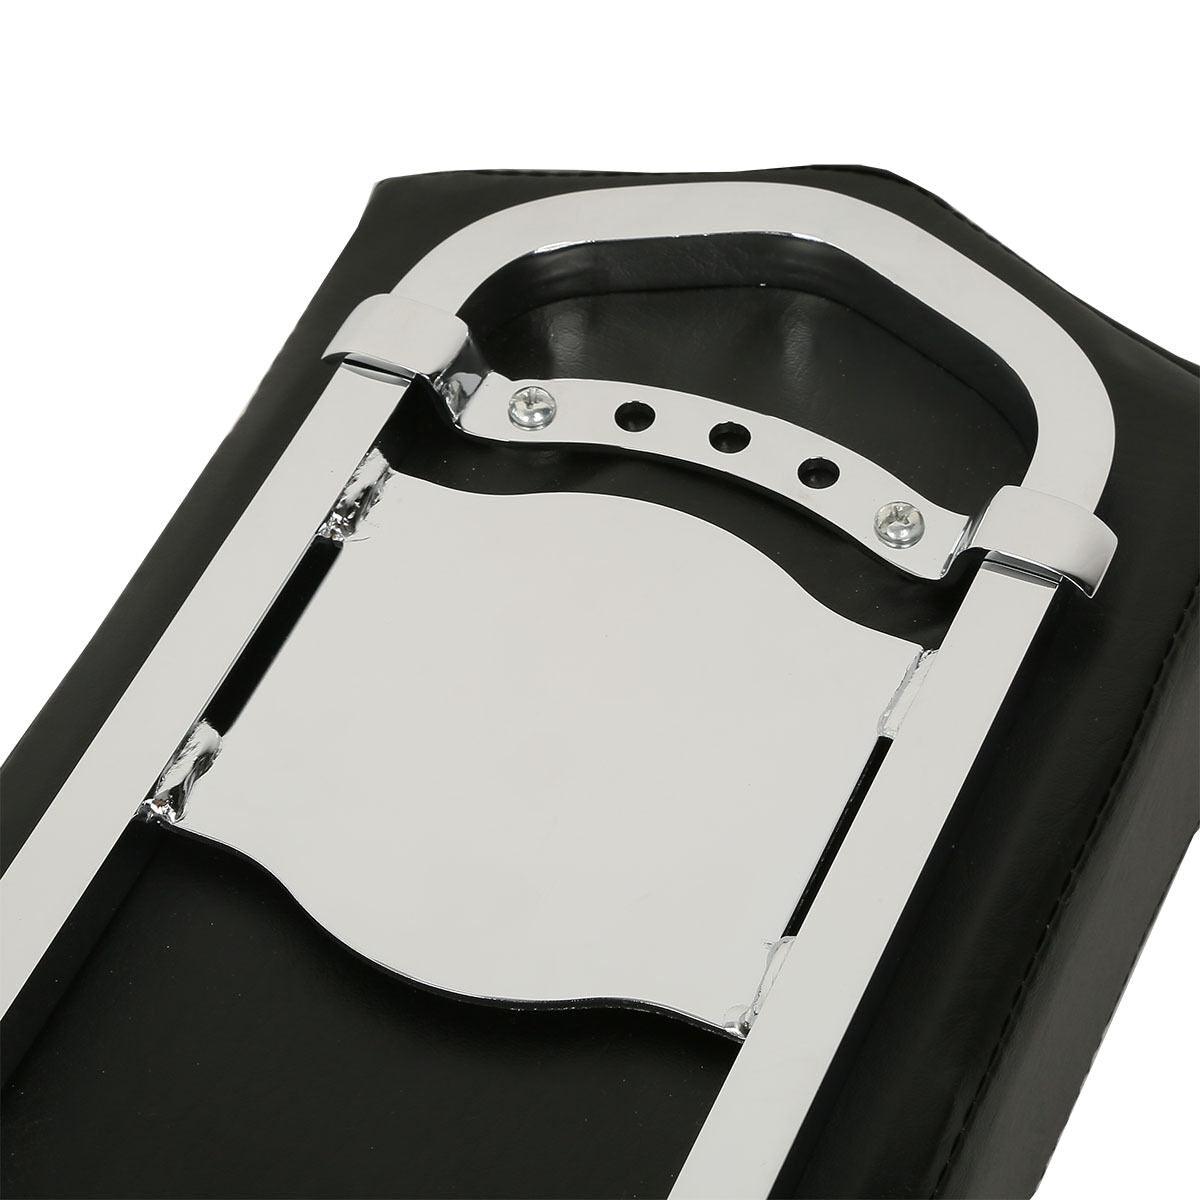 Passenger Sissy Bar Backrest Fit For Harley Springer Softail Custom FXSTS FXSTC - Moto Life Products